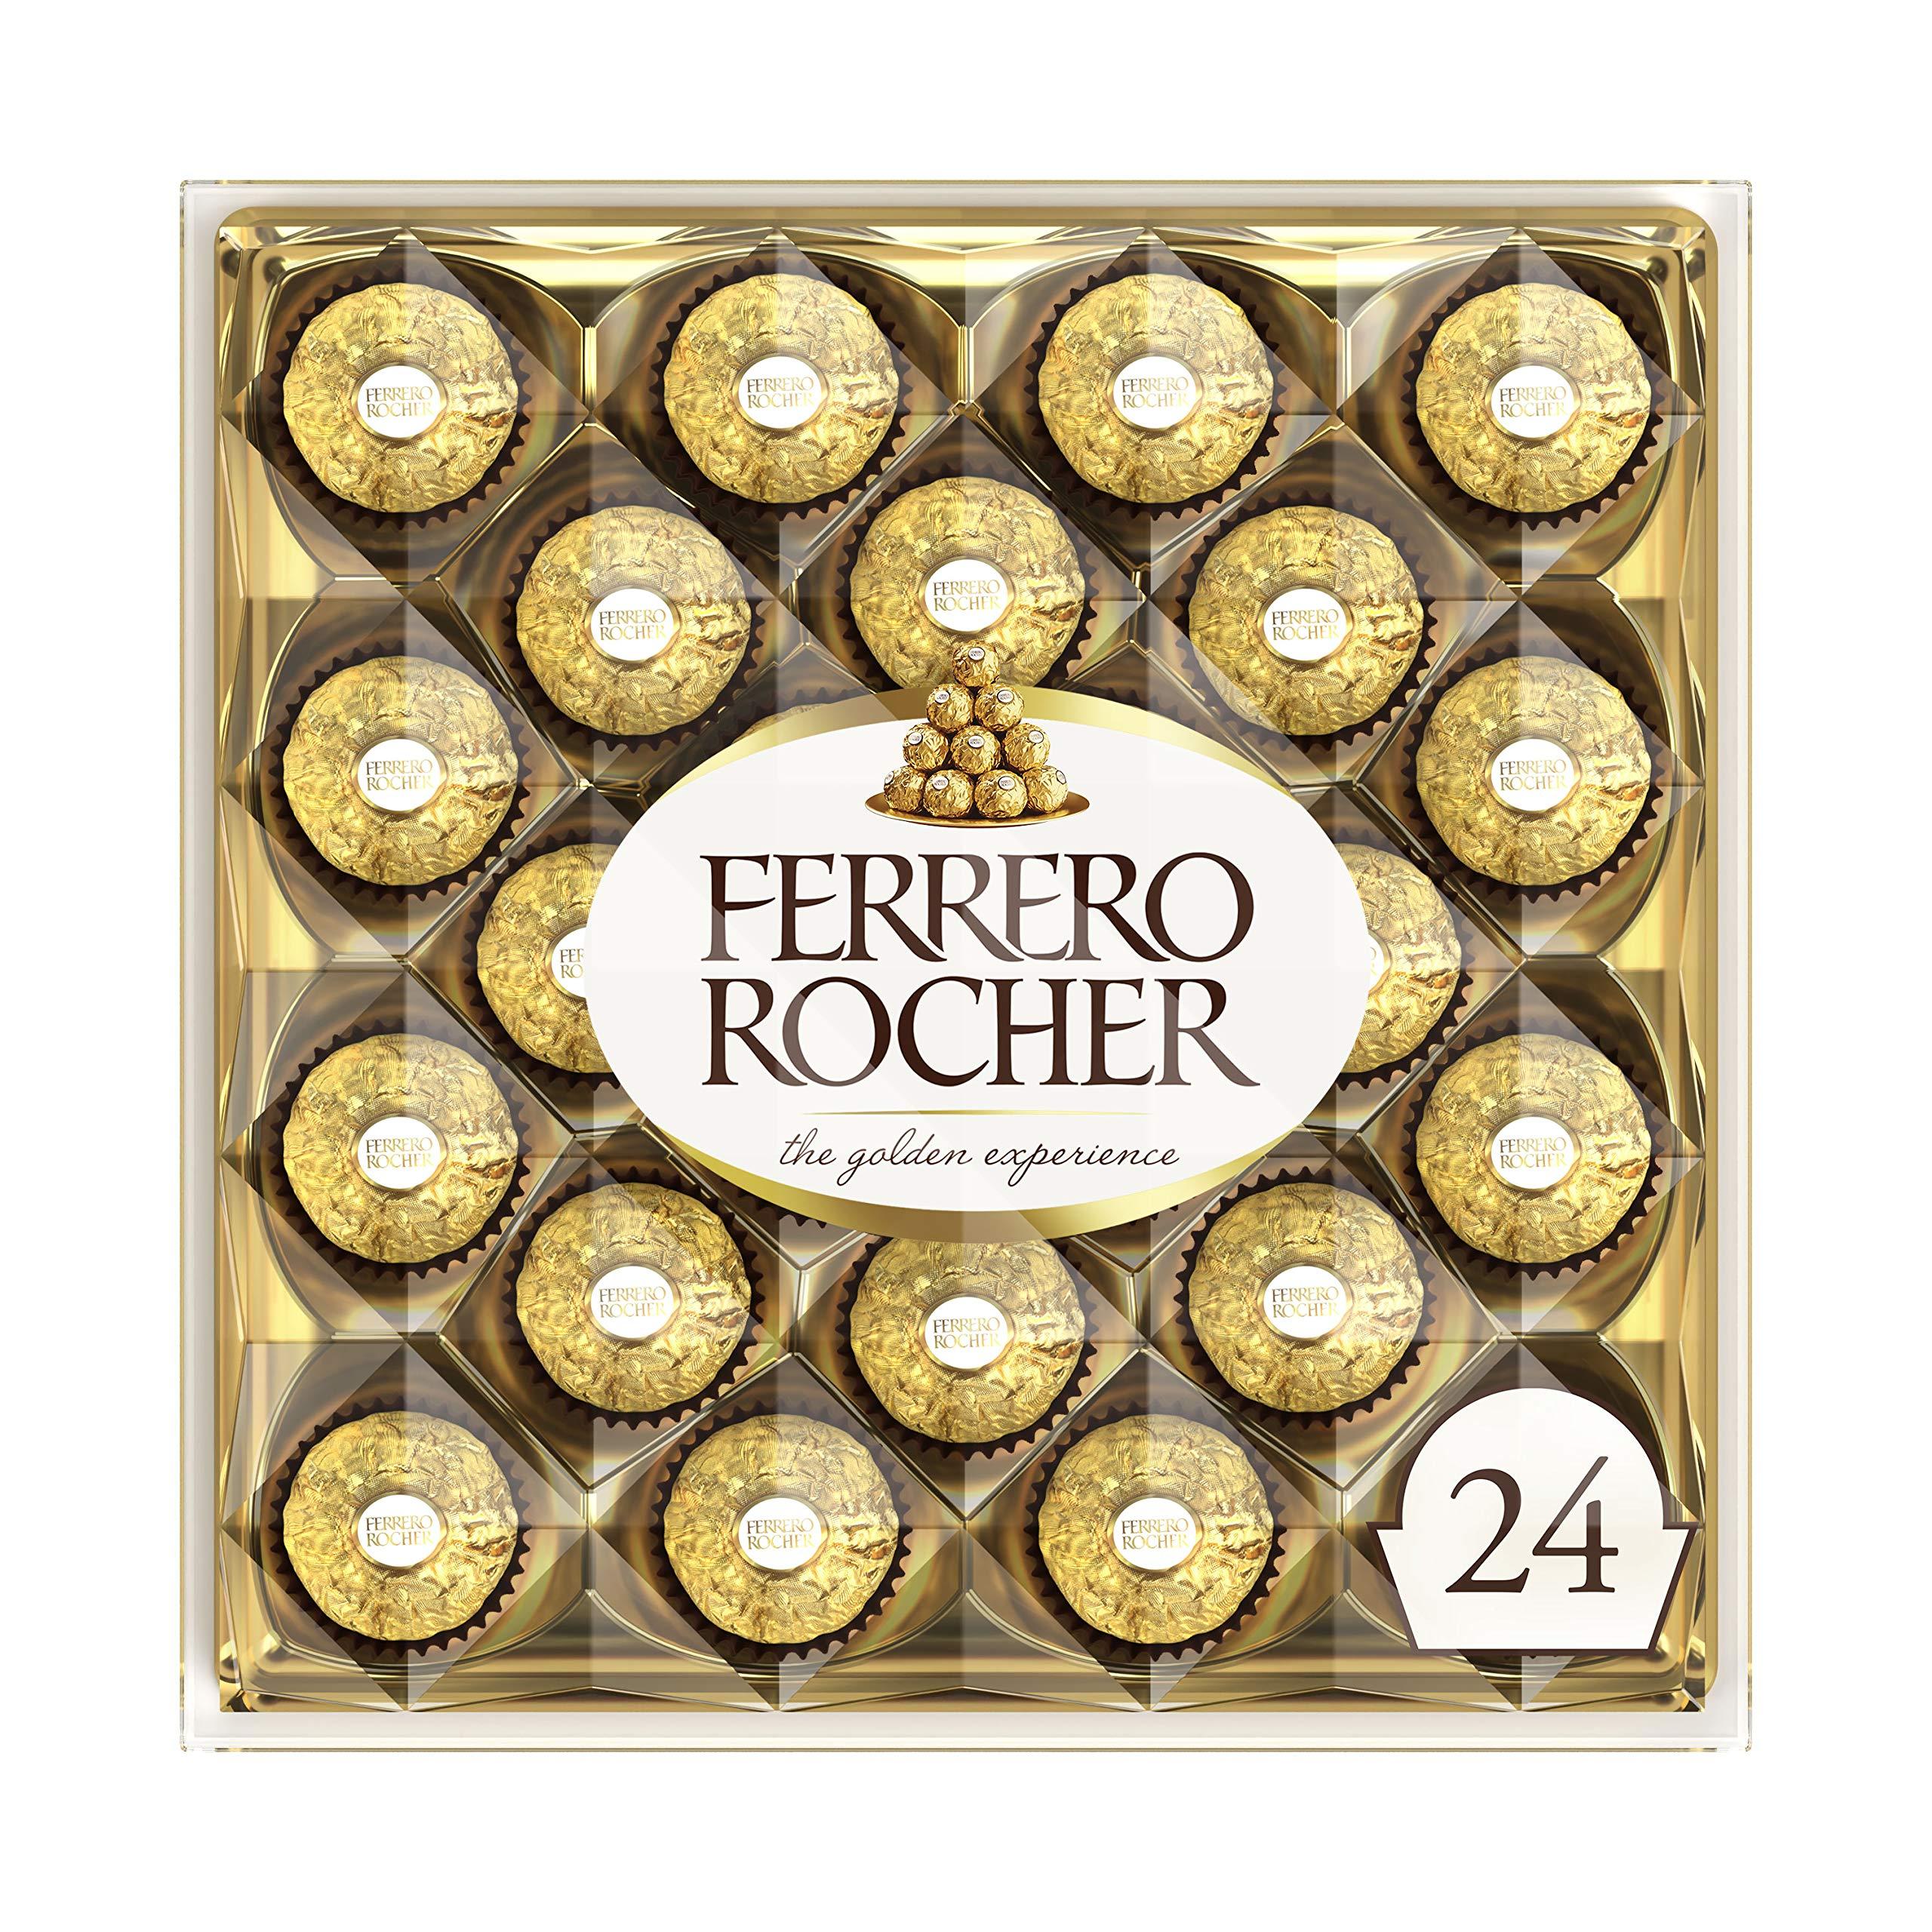 Ferrero Rocher Fine Hazelnut Milk Chocolate, 24 Count, Chocolate Candy Gift Box, 10.5 oz 24 Count (Pack of 1) Ferrero Rocher - image 1 of 7